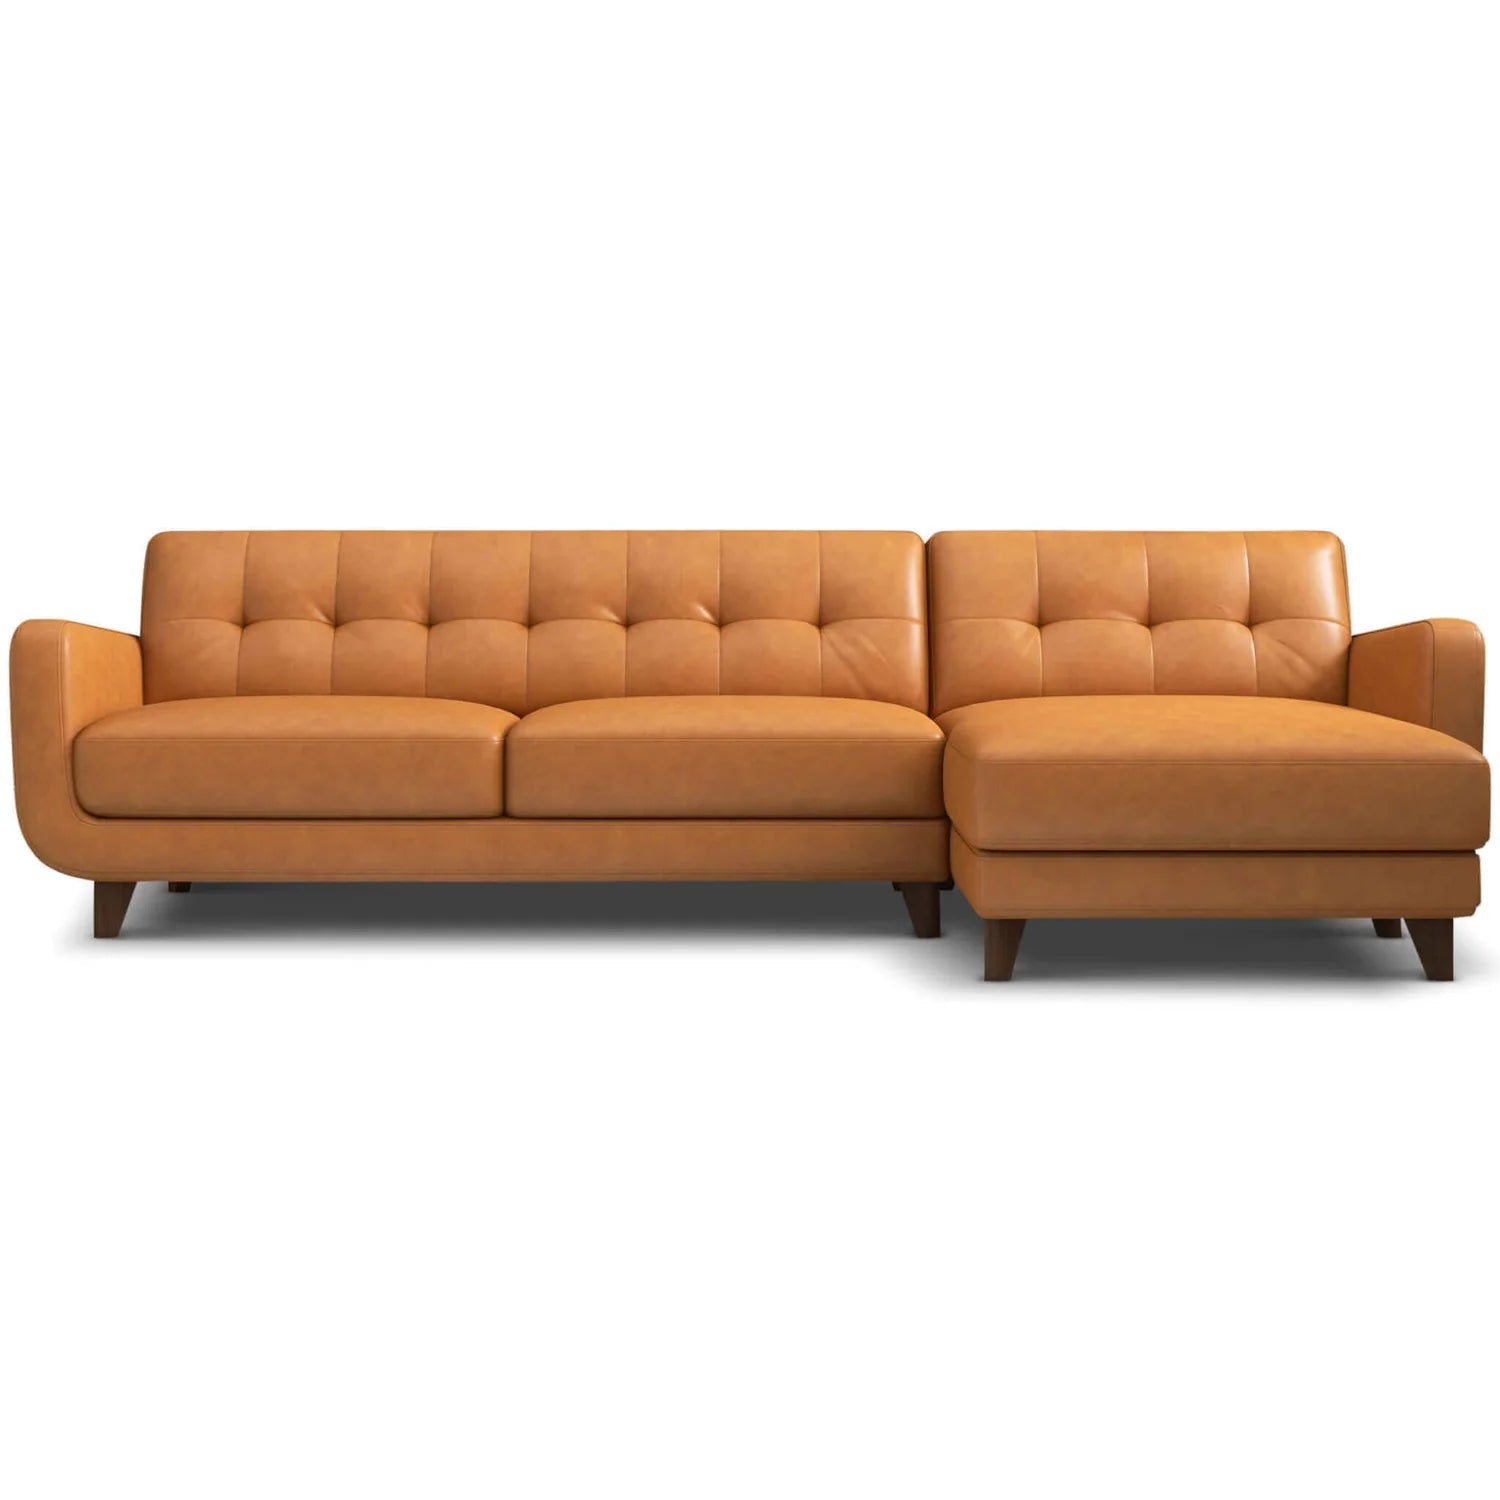 Allison Tan Leather Sectional Sofa - Berre Furniture